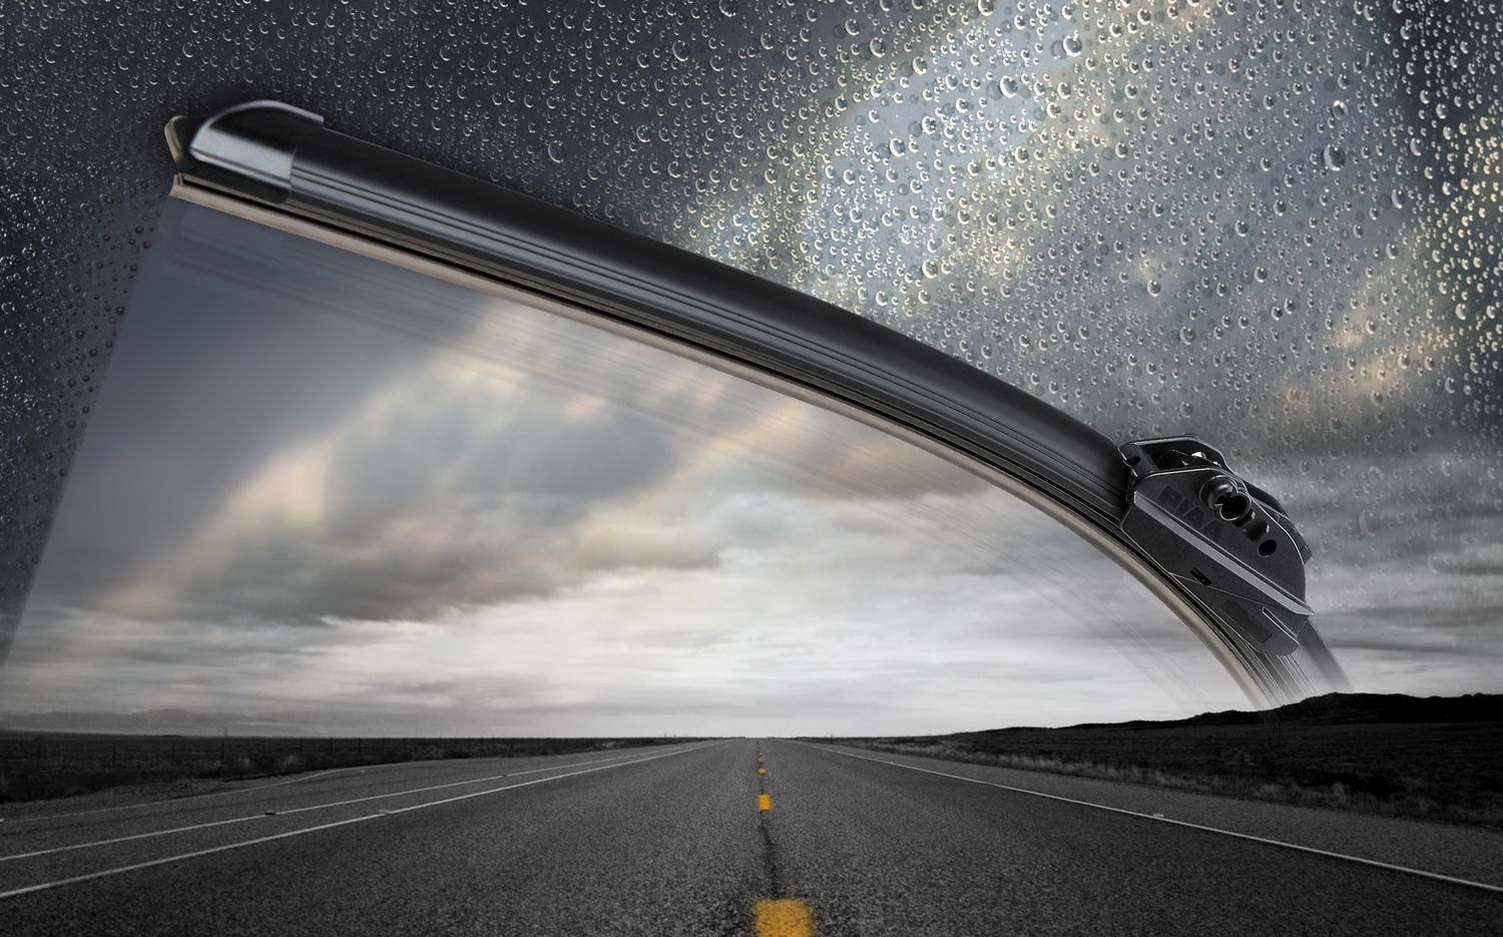 #شیشه_اتومبیل #آینه_اتومبیل #آیینه_اتومبیل #windshield #windshield-replacement